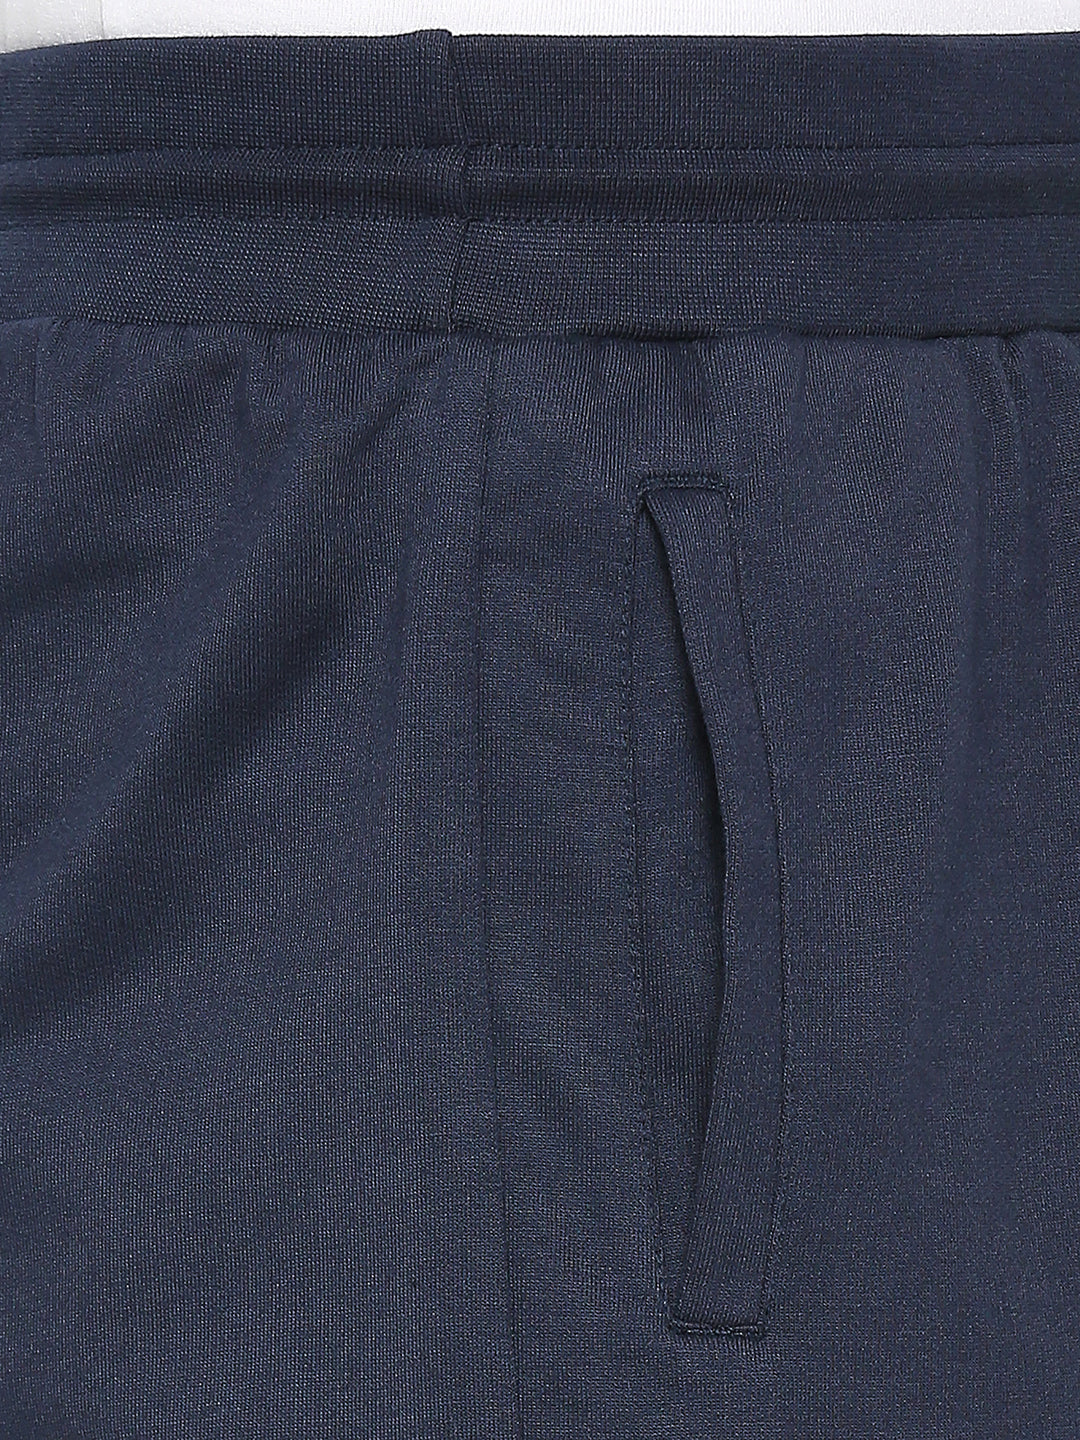 Men Navy Cotton Blend Shorts - Underjeans by Spykar